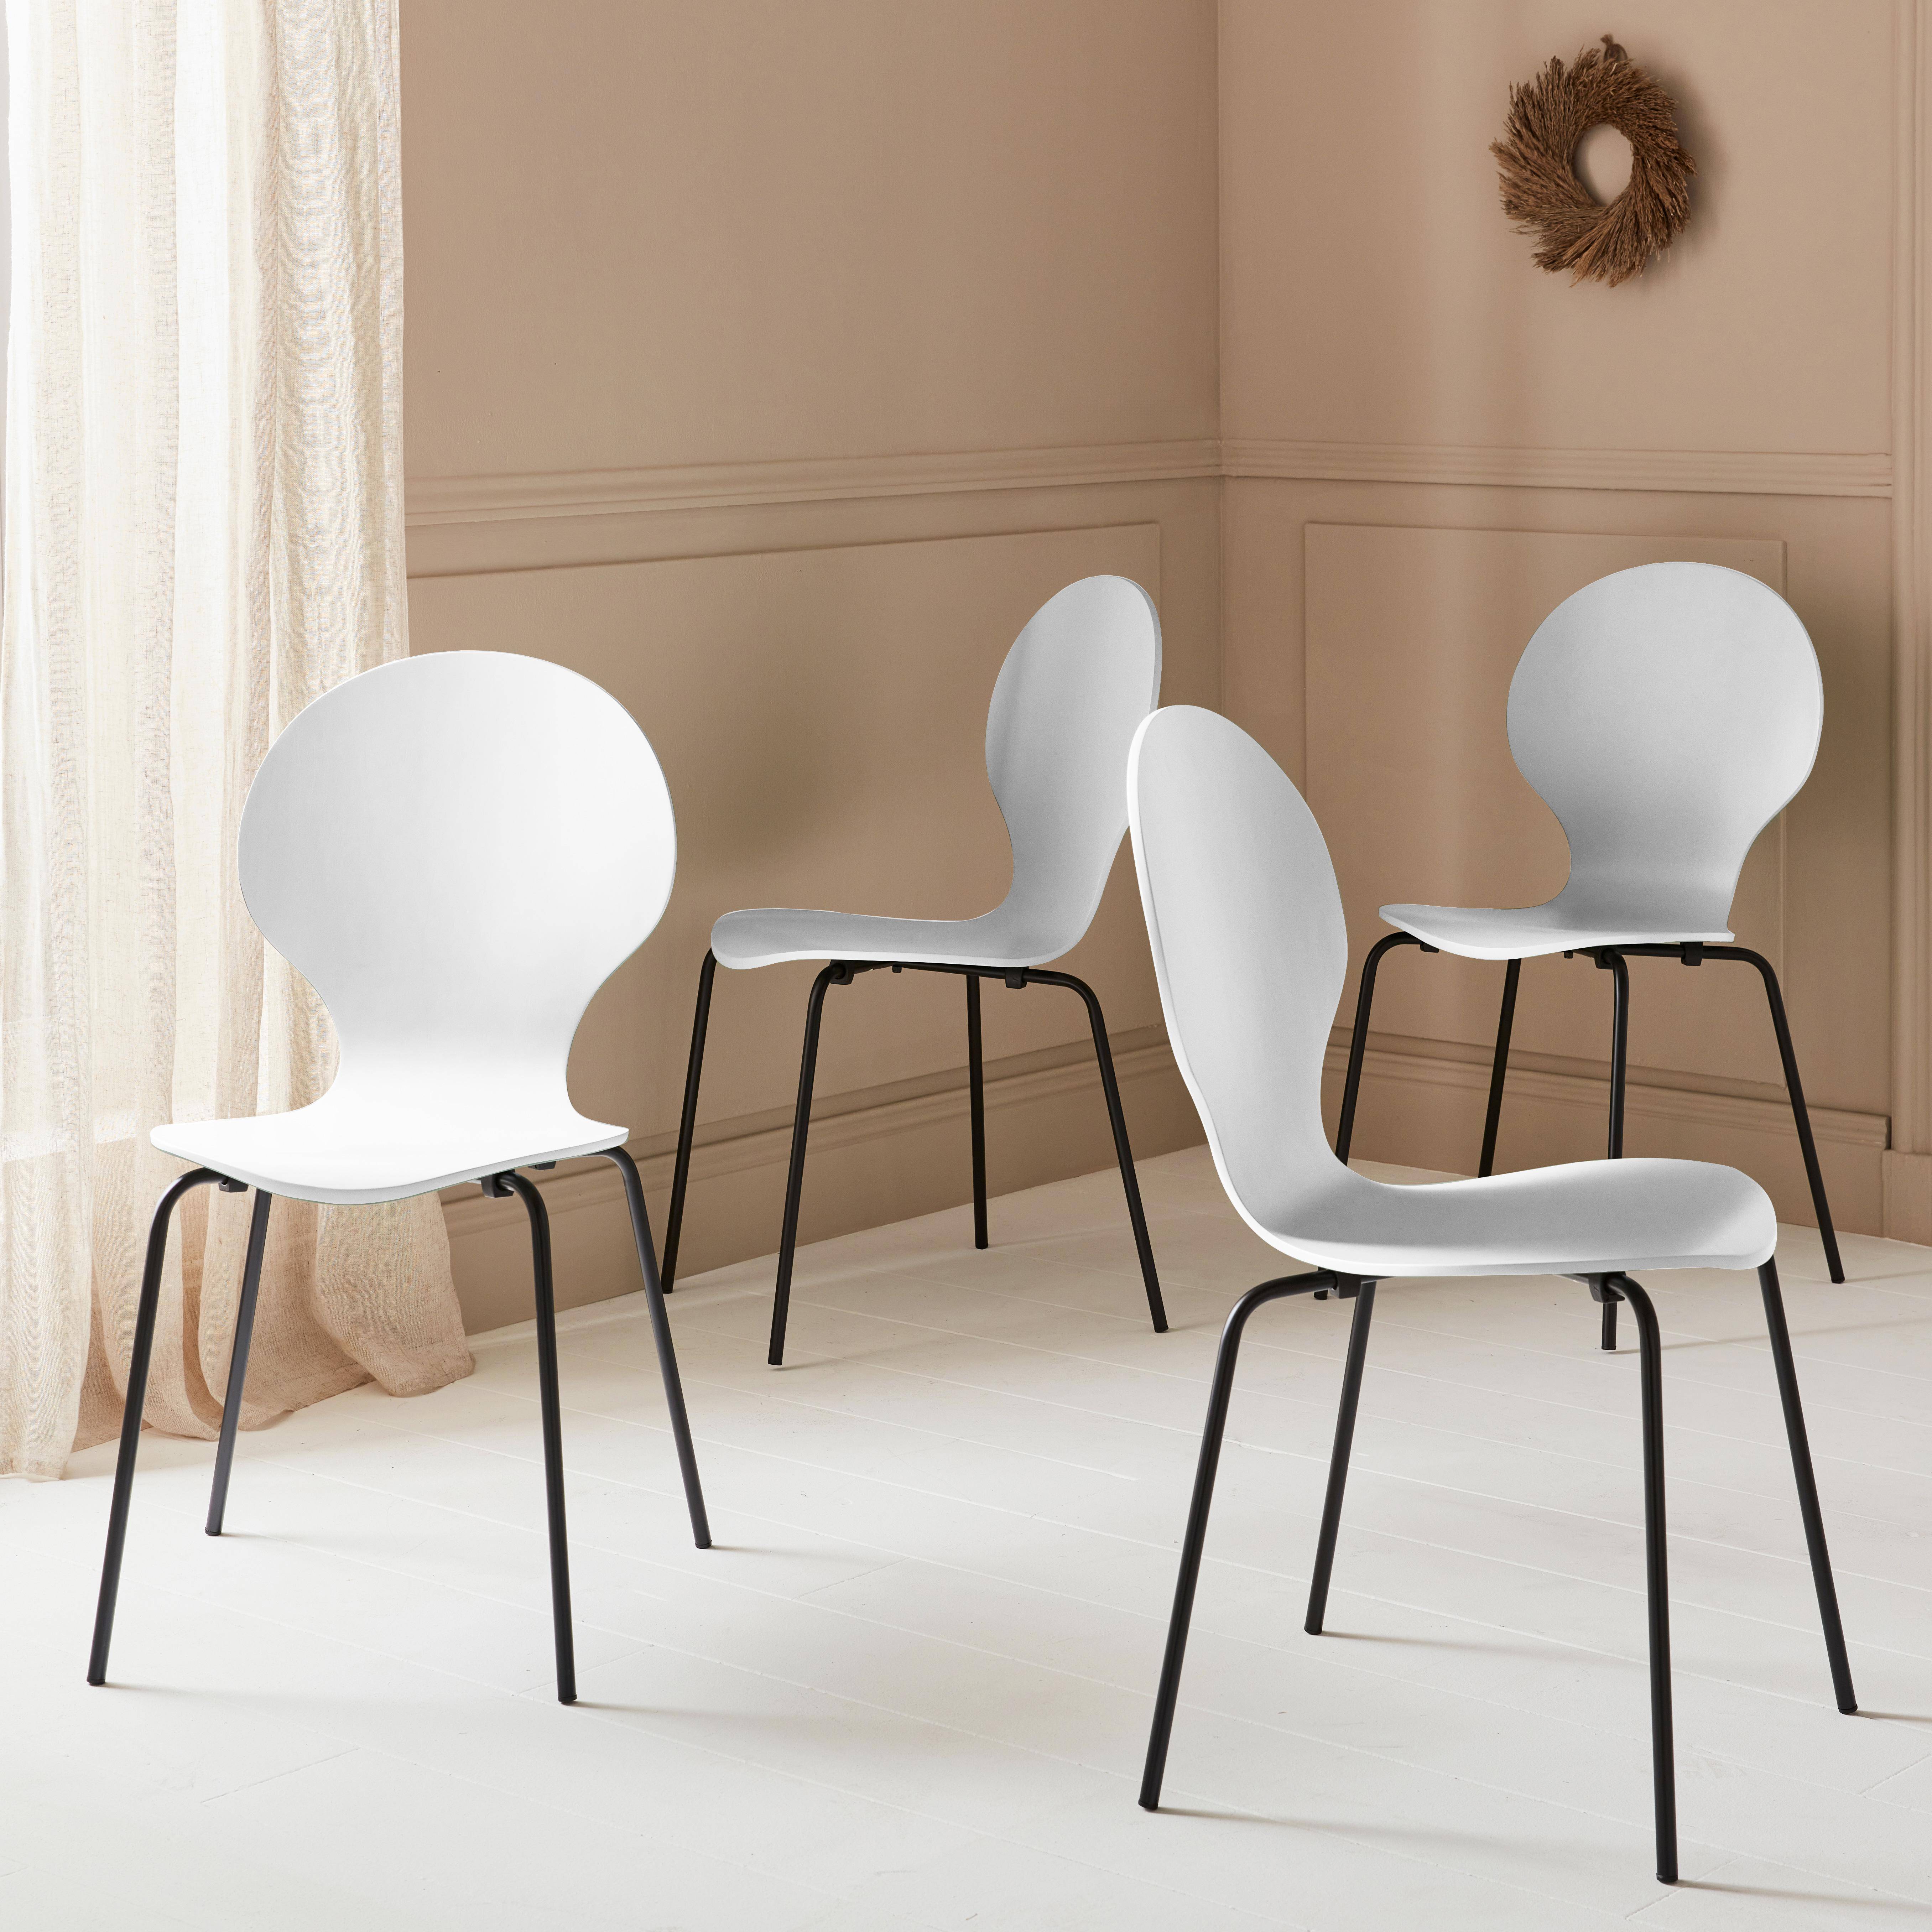 Set van 4 witte retro stapelstoelen, hevea hout en multiplex, stalen poten, Naomi, B 43 x D 48 x H 87cm Photo2